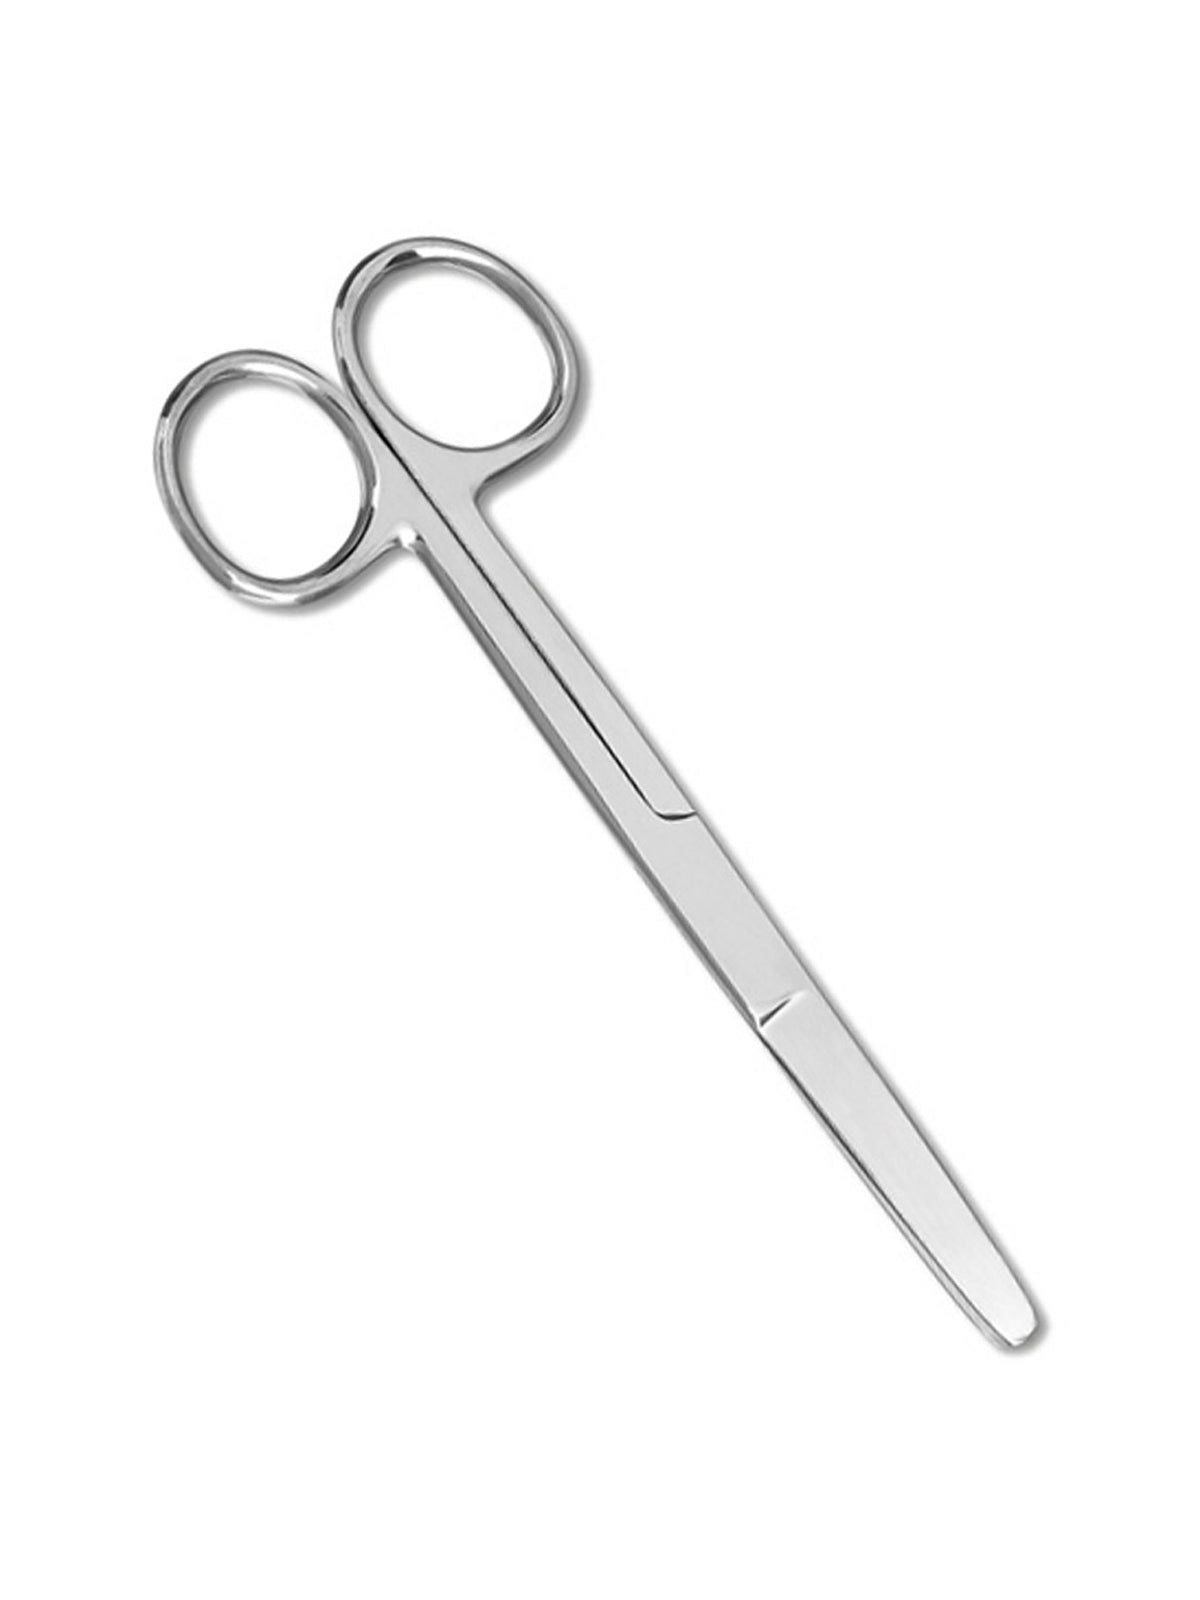 5.5" Dressing Scissors - 59 - Standard